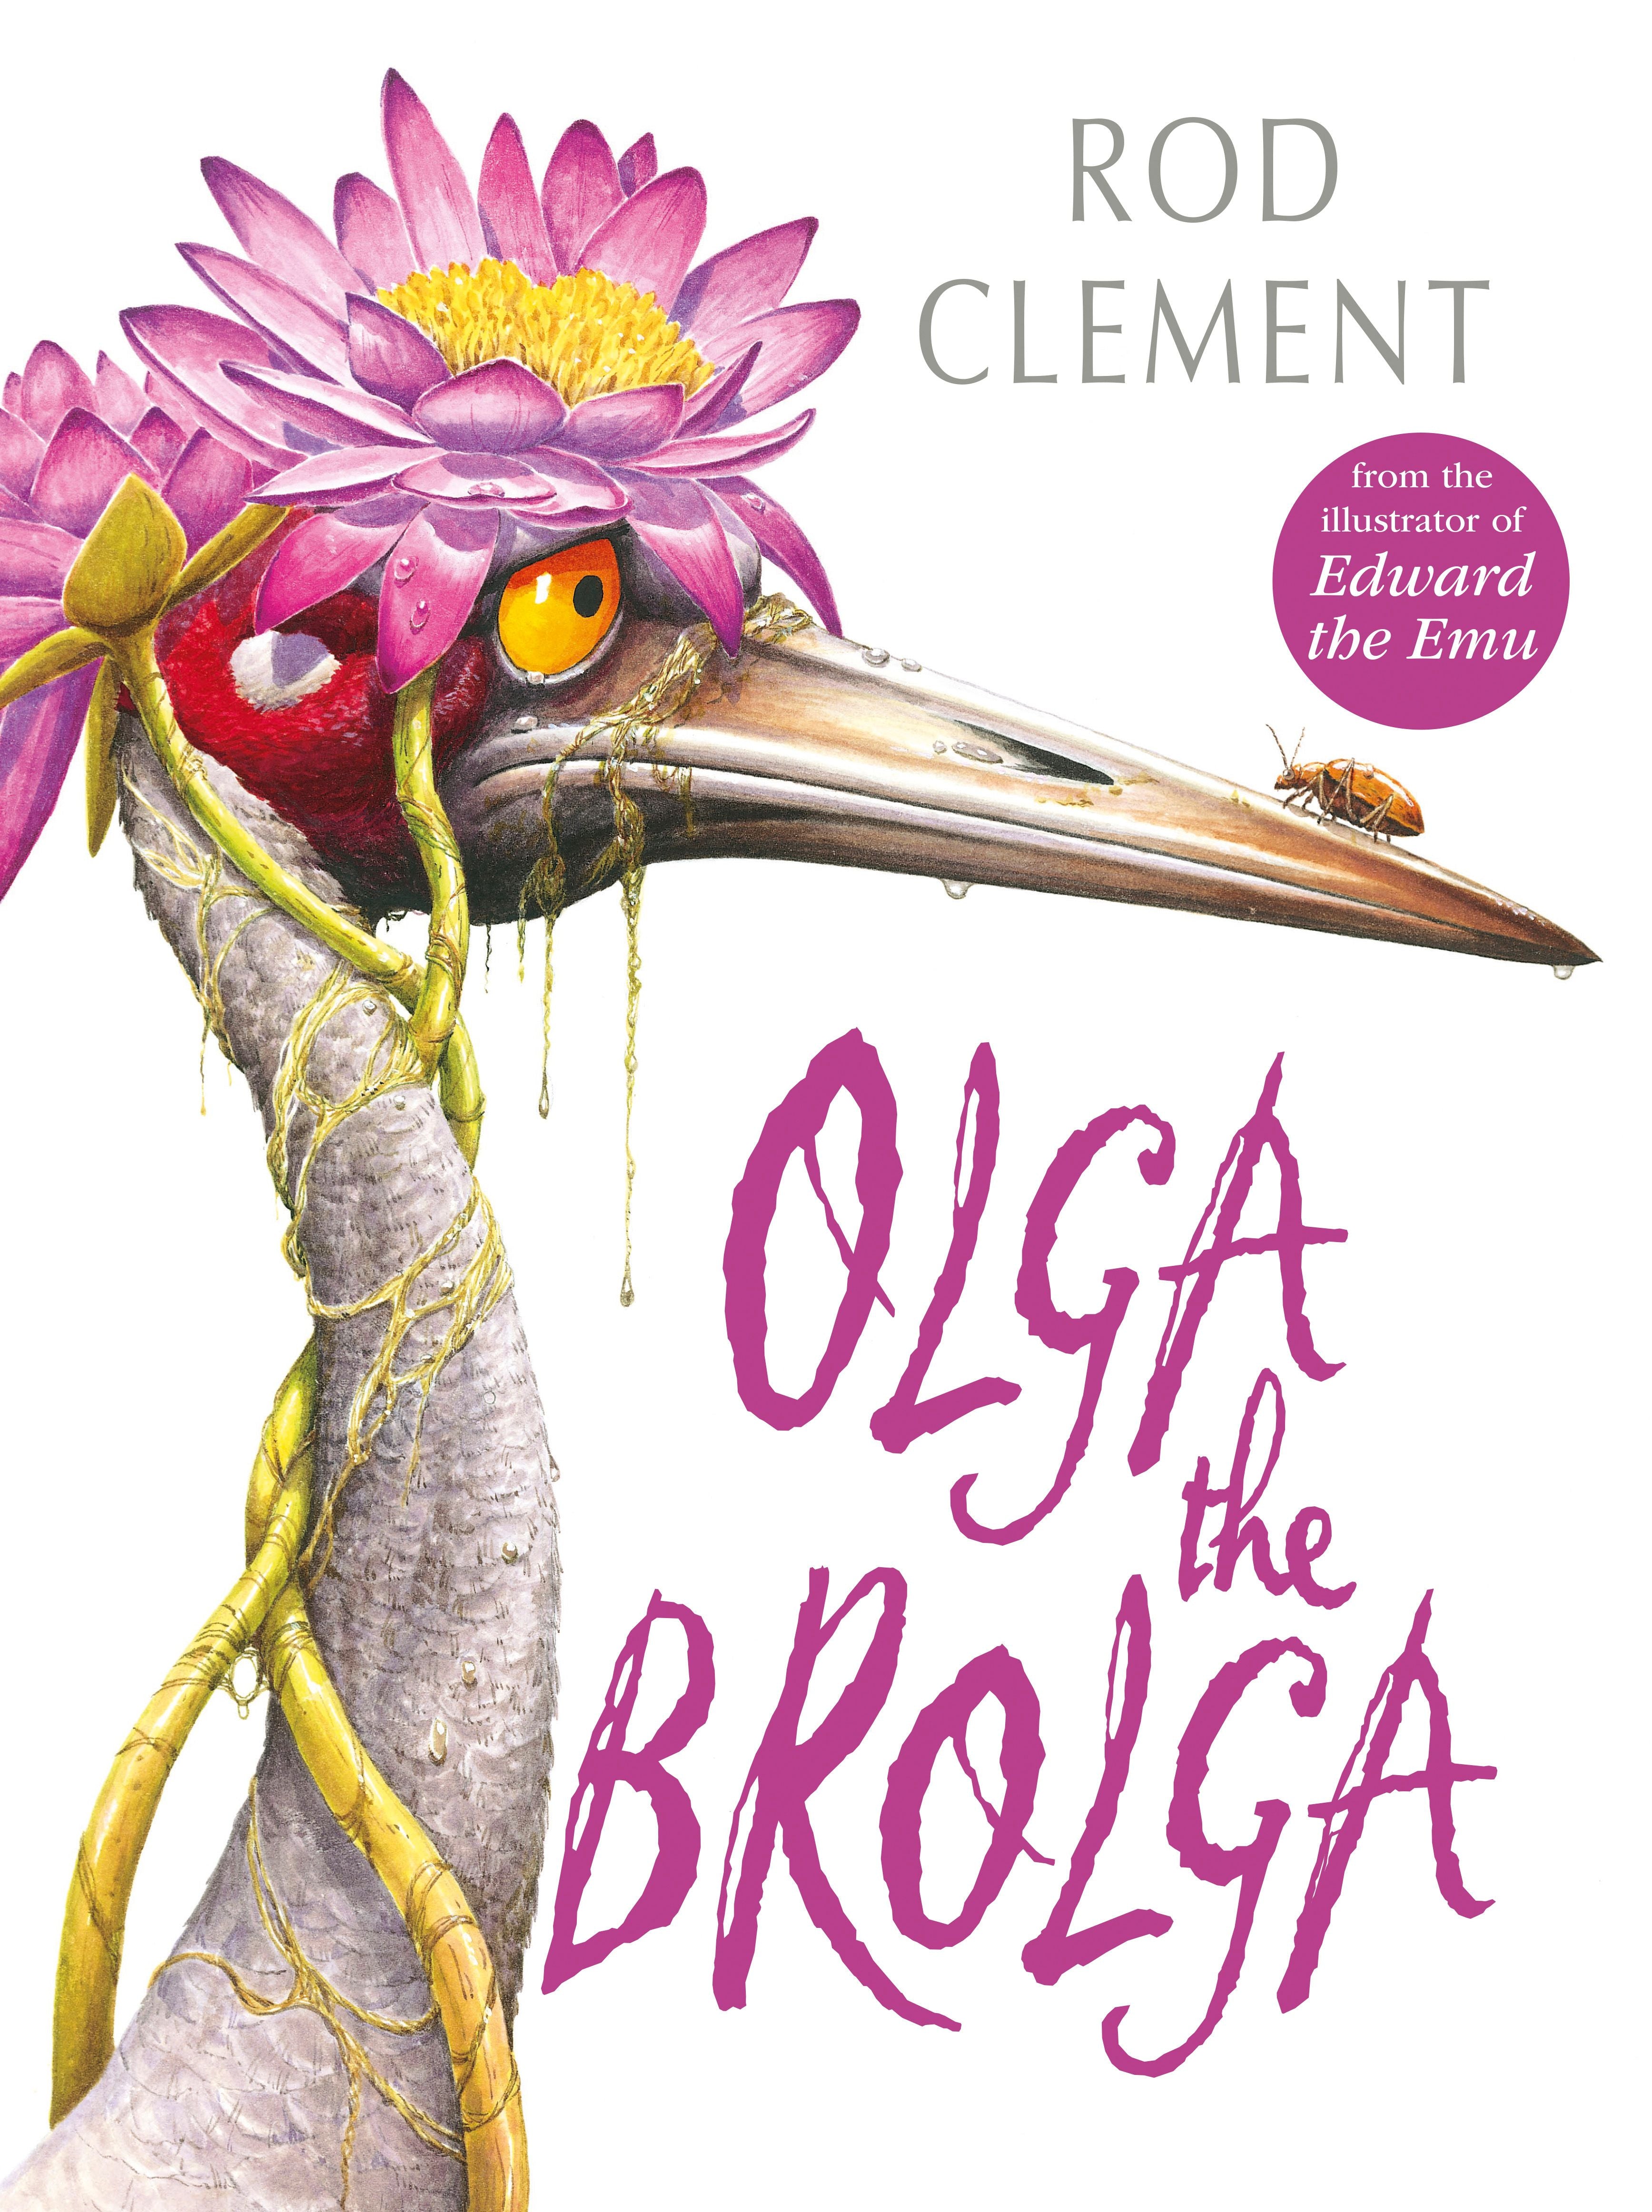 Olga the Brolga by Rod Clement